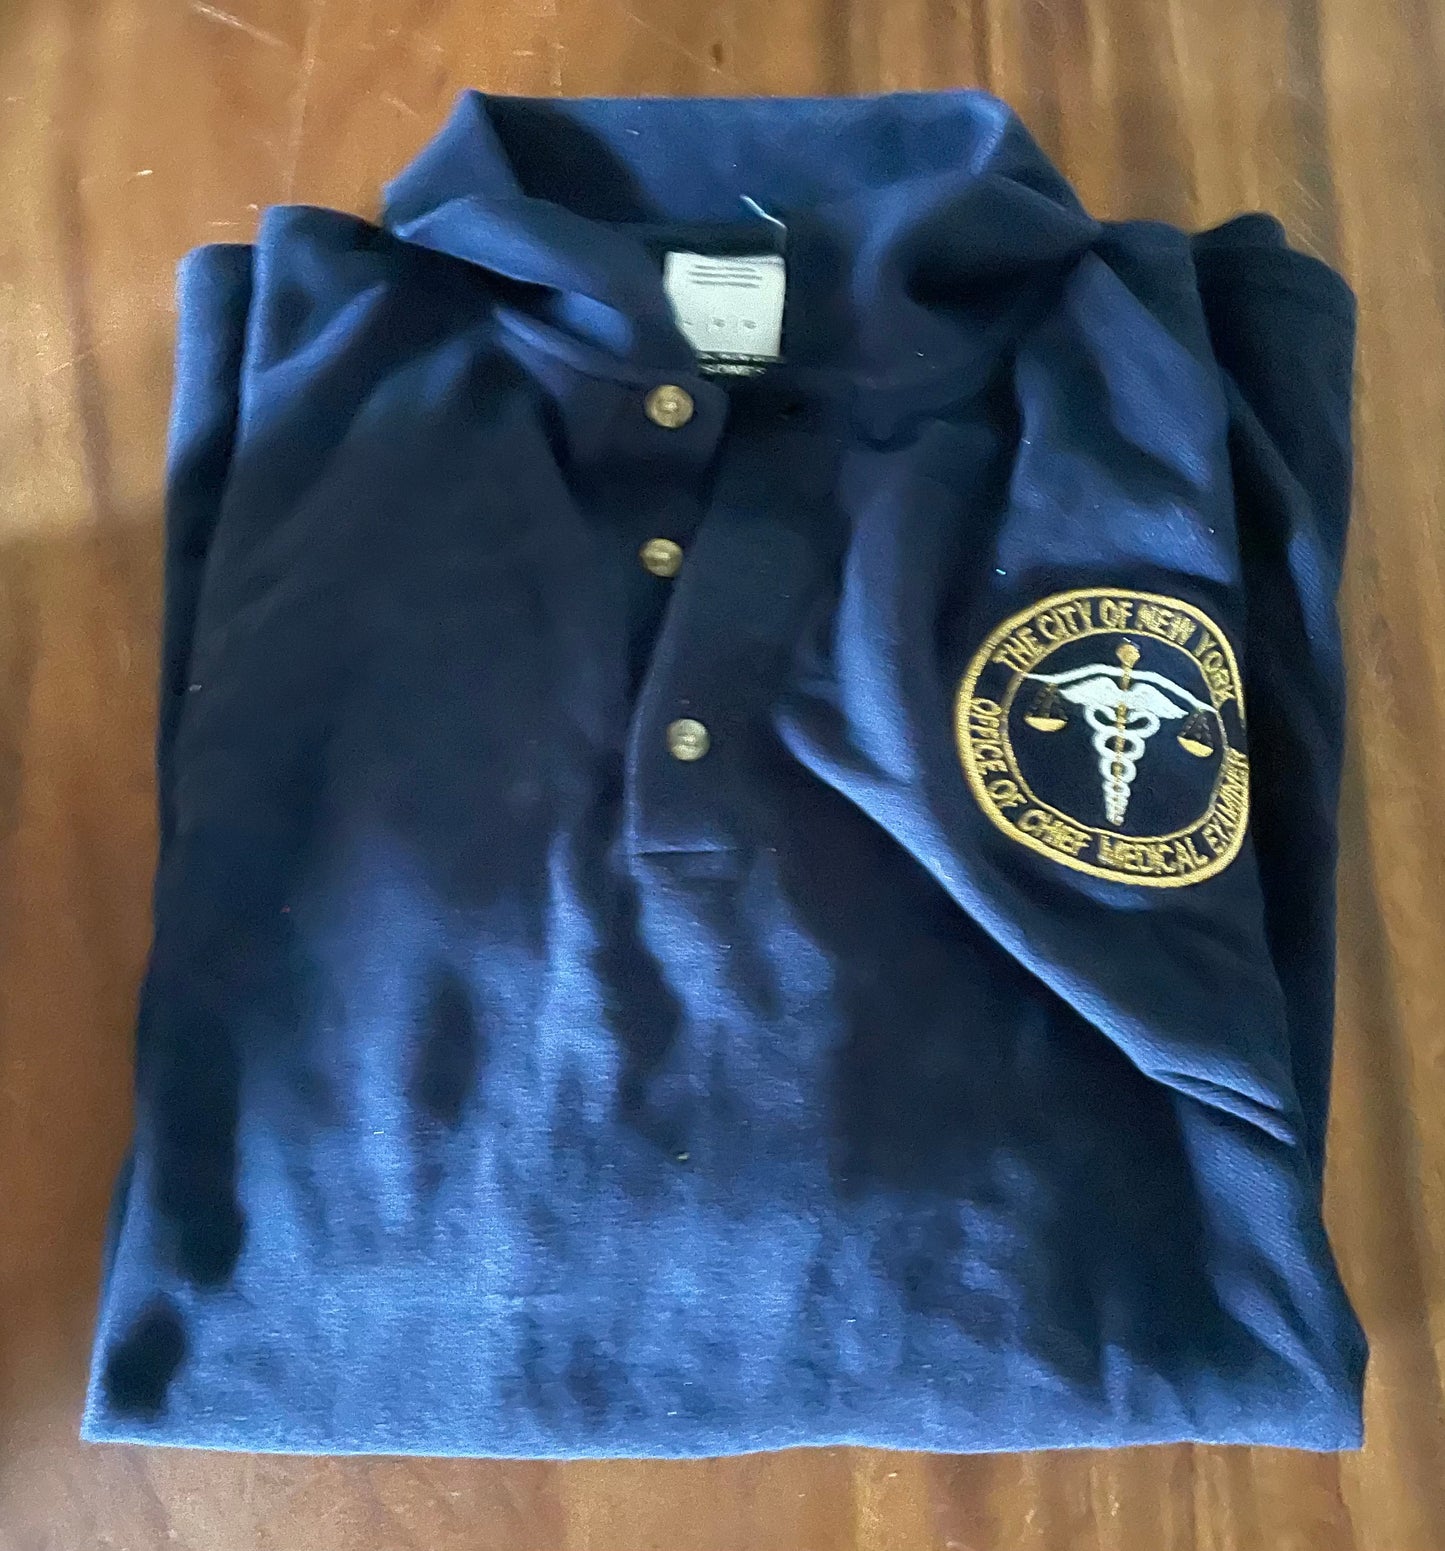 SHADES OF BLUE: City Of New York Office of Medican Examiner Shirt (L)